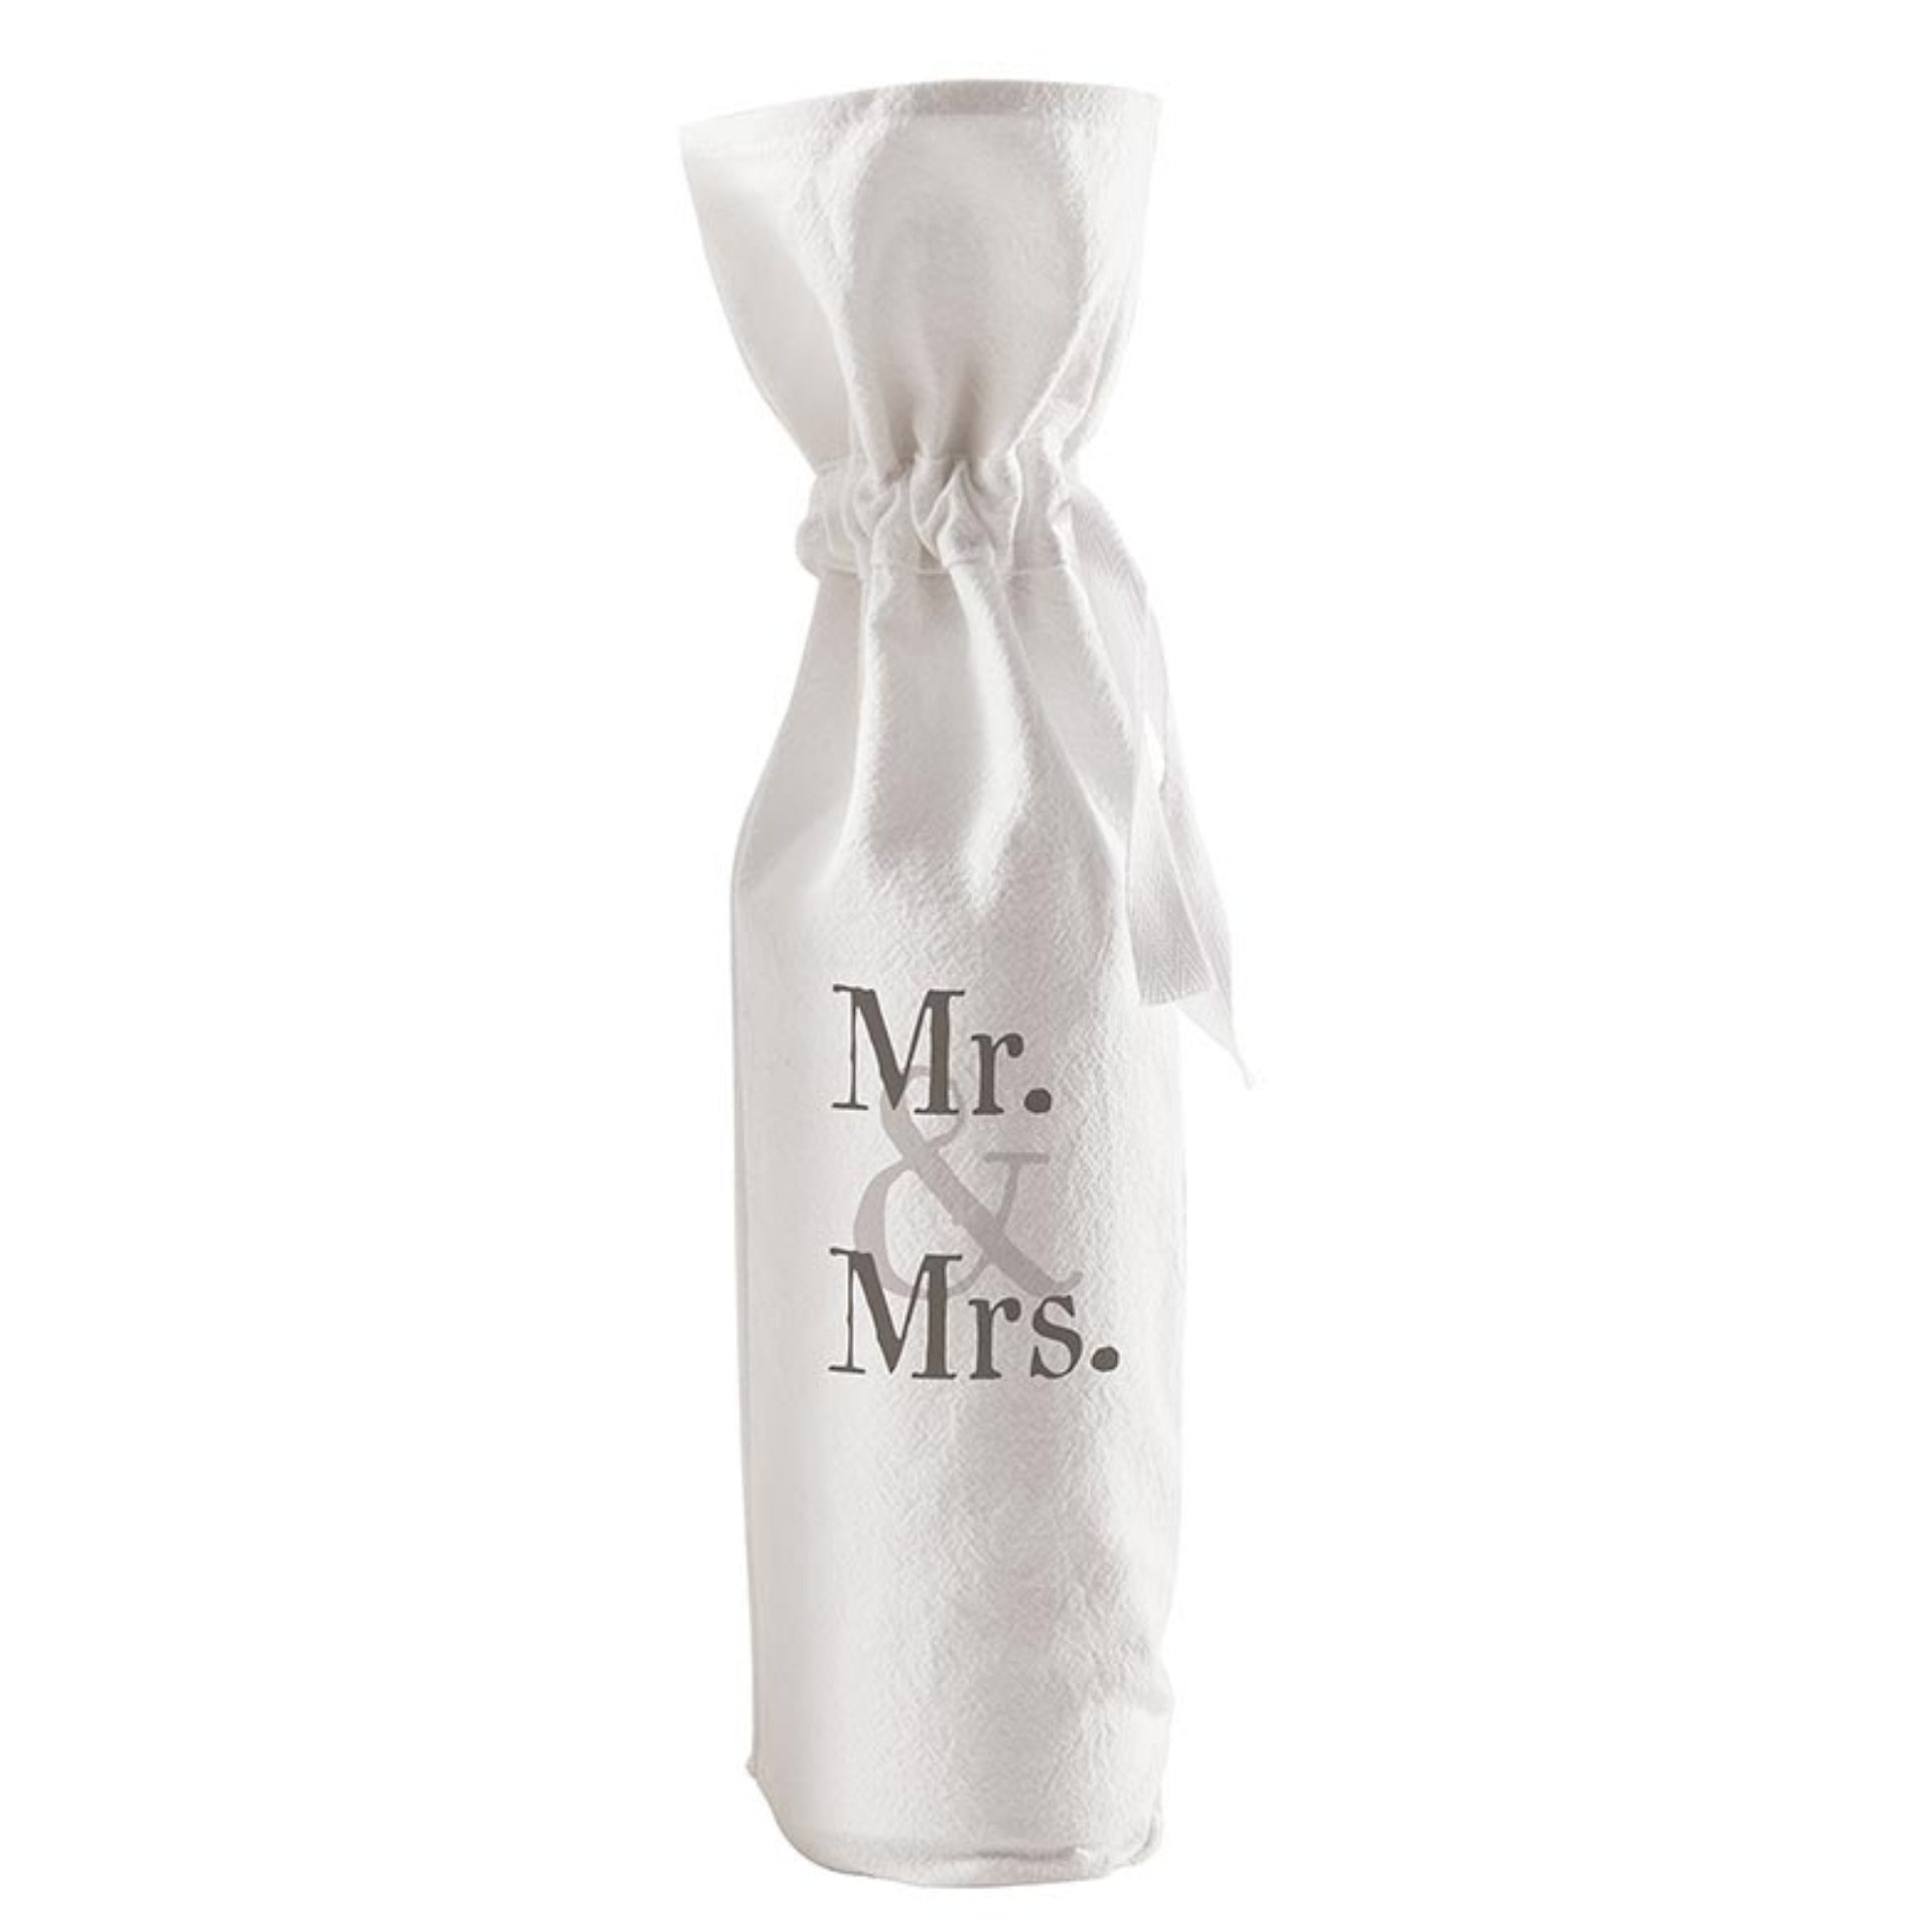 Mr & Mrs Cotton Drawstring Bag - Wine Bag, Wedding Gift Bag, Anniversary Gift Bag | oak7west.com